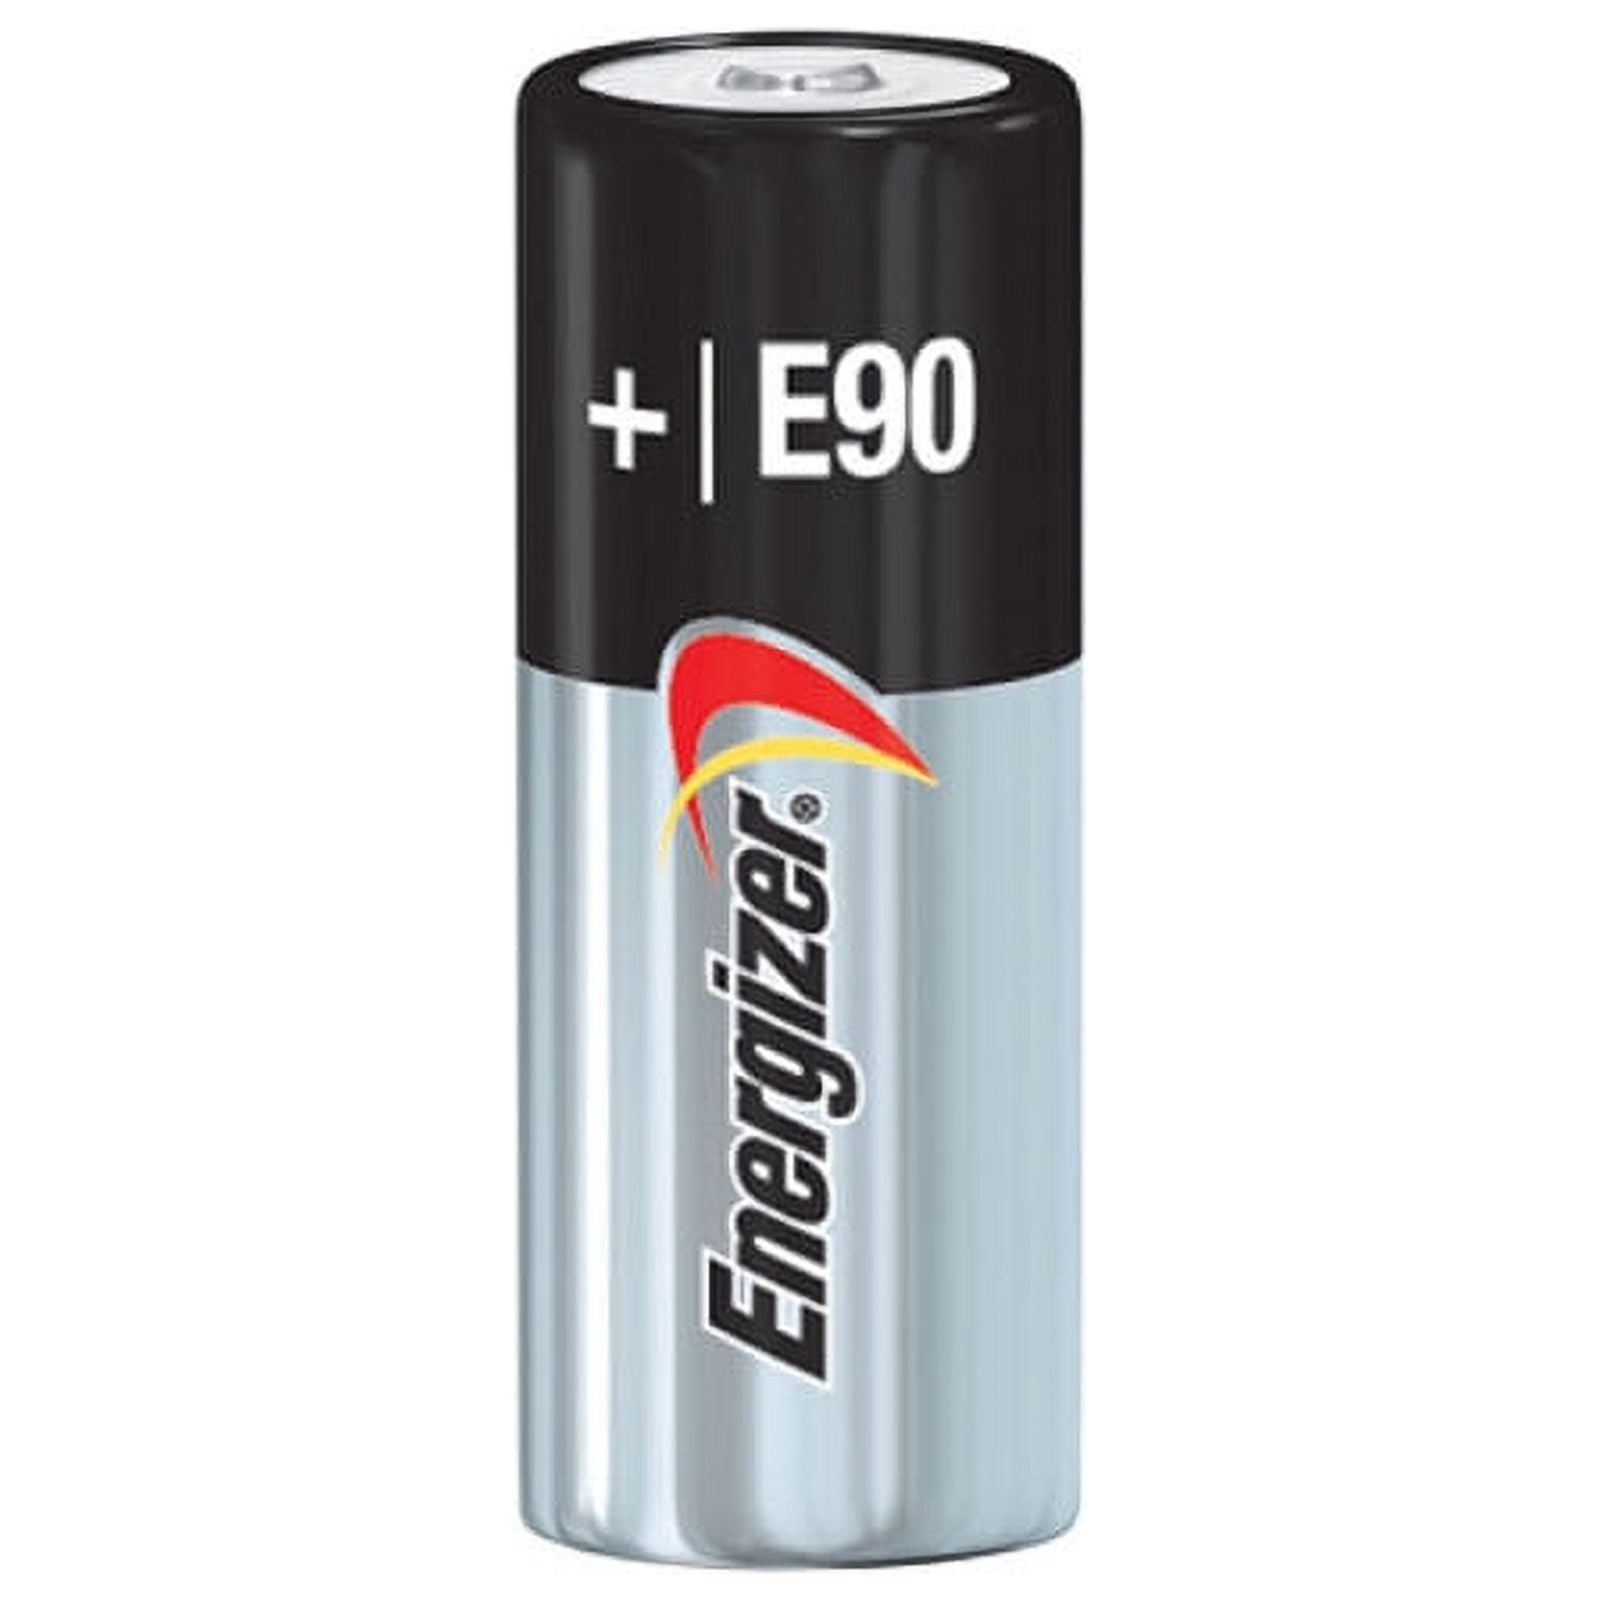 Батарейка 1 5 вольт. Батарейка Energizer lr1/e90. Батарейка n/lr1 Energizer 1.5v Alkaline 083064. Battery: lr1. E90 и n батарейки.